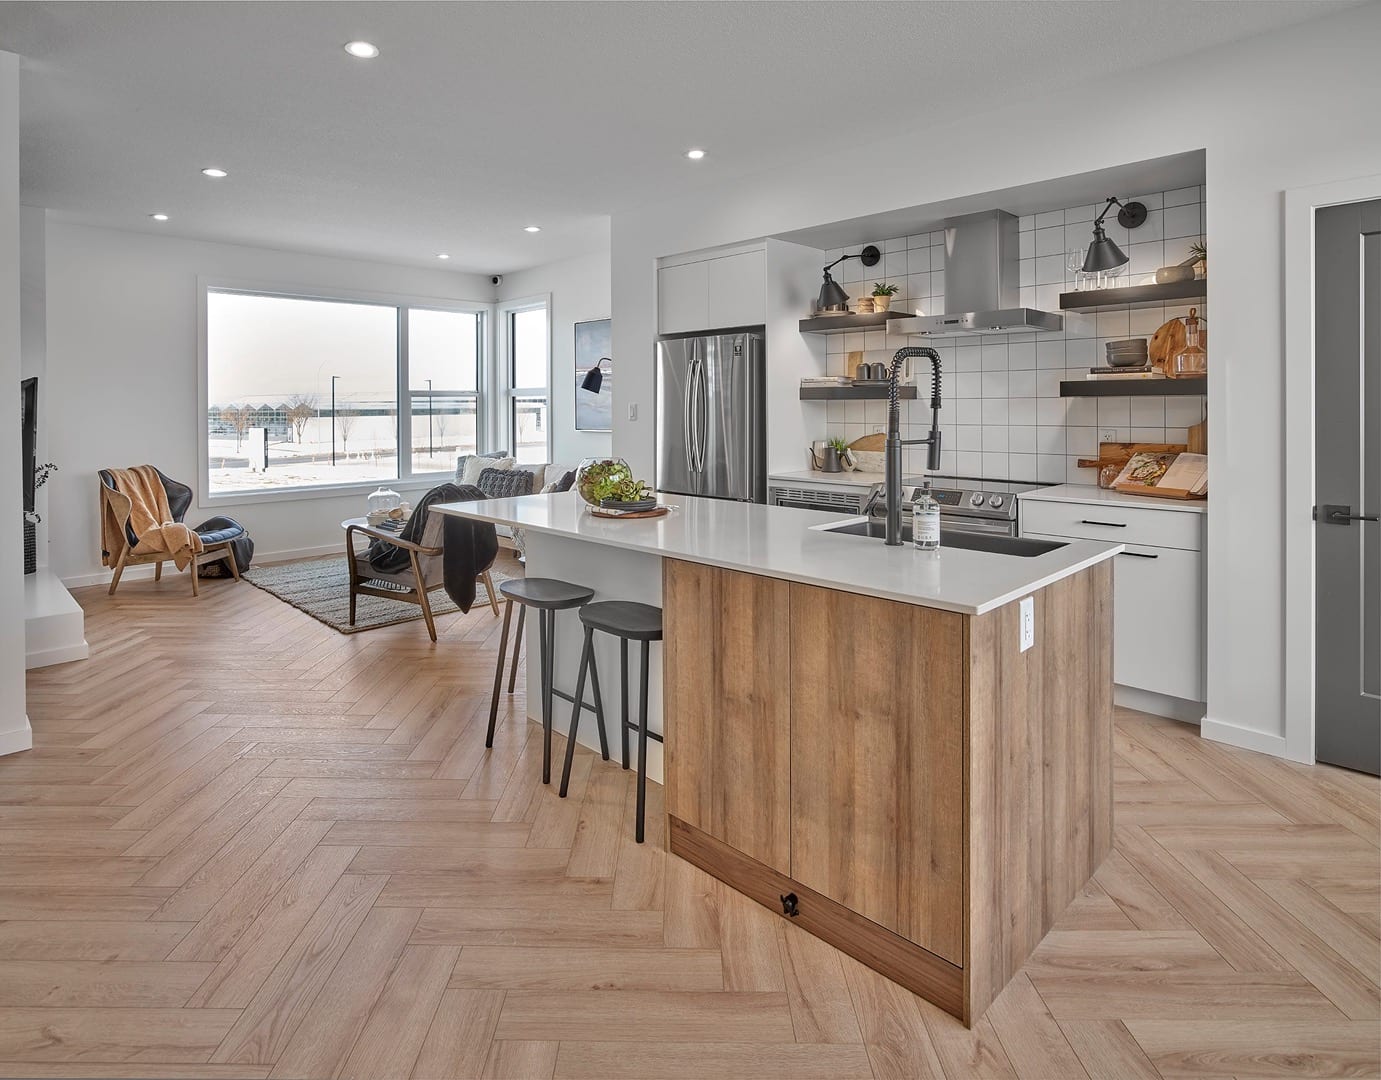 Midtown interior kitchen open concept